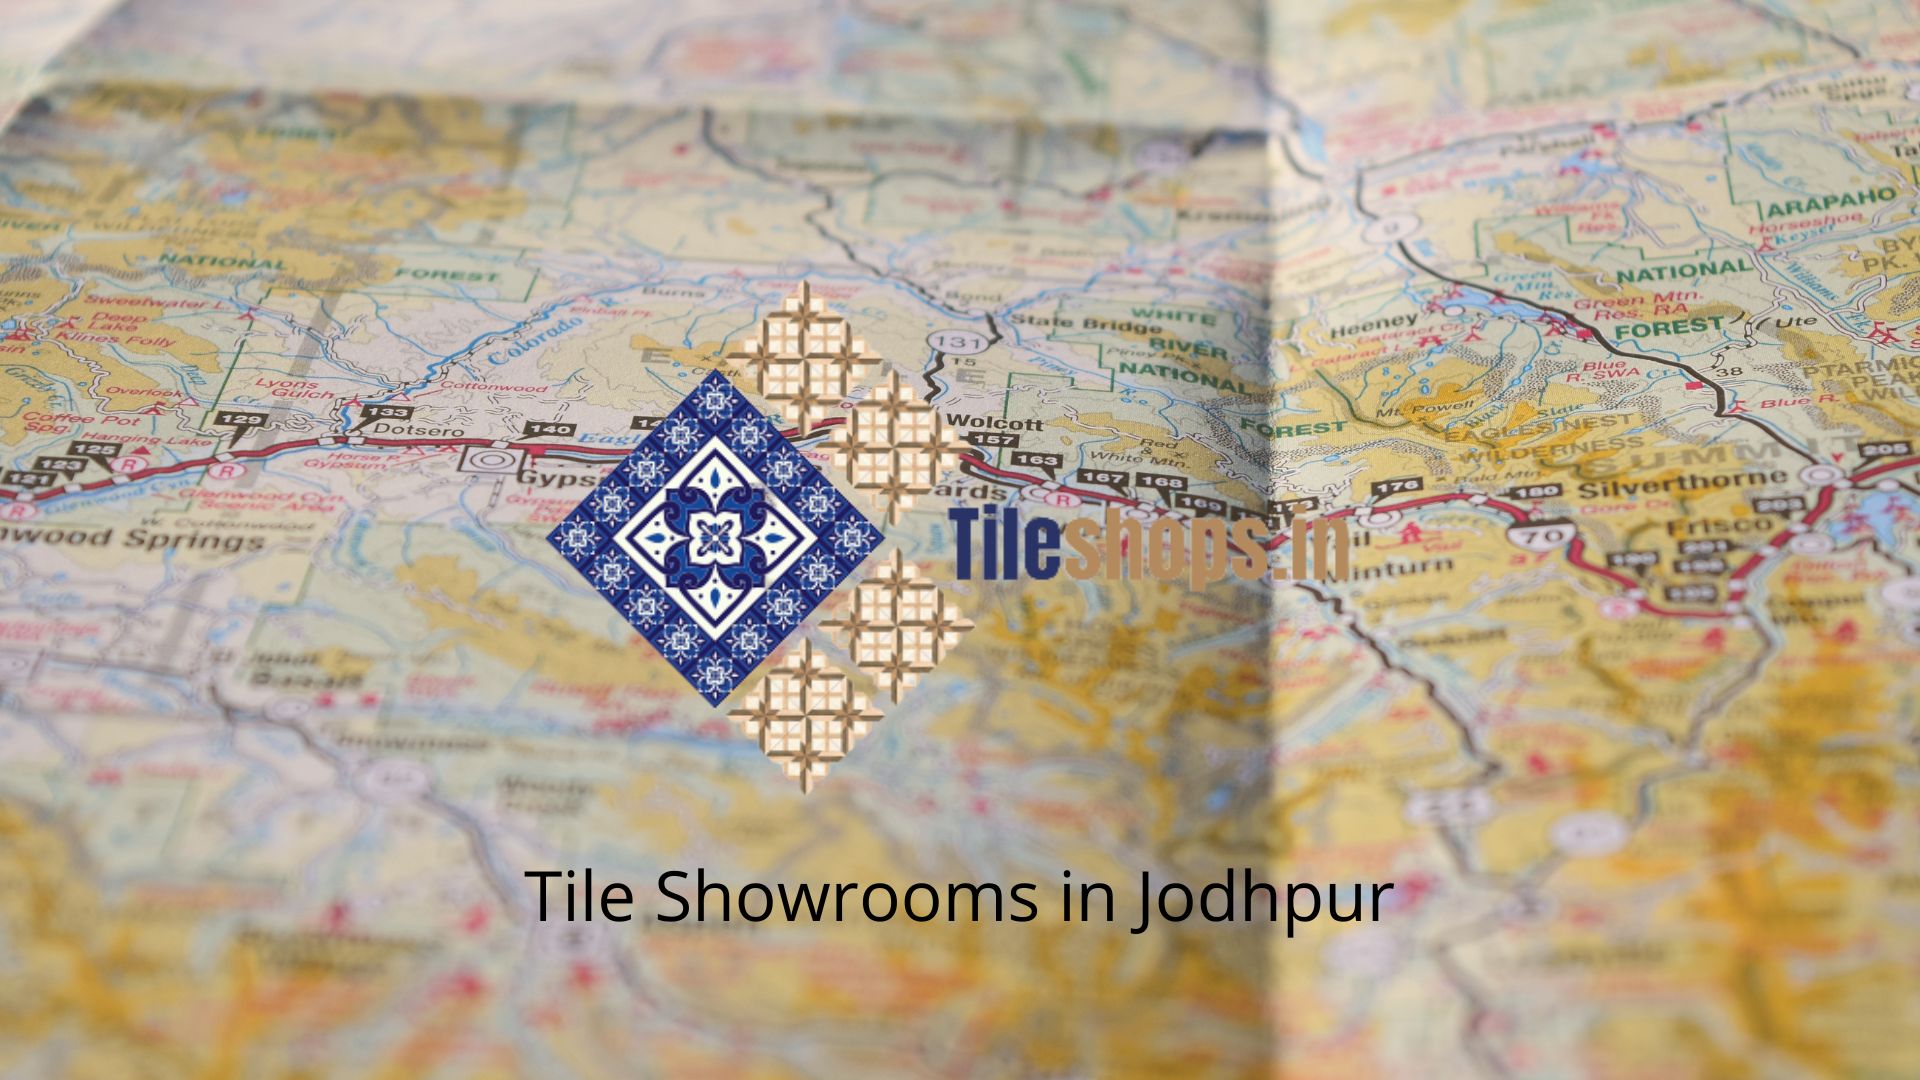 Tile Showrooms in Jodhpur